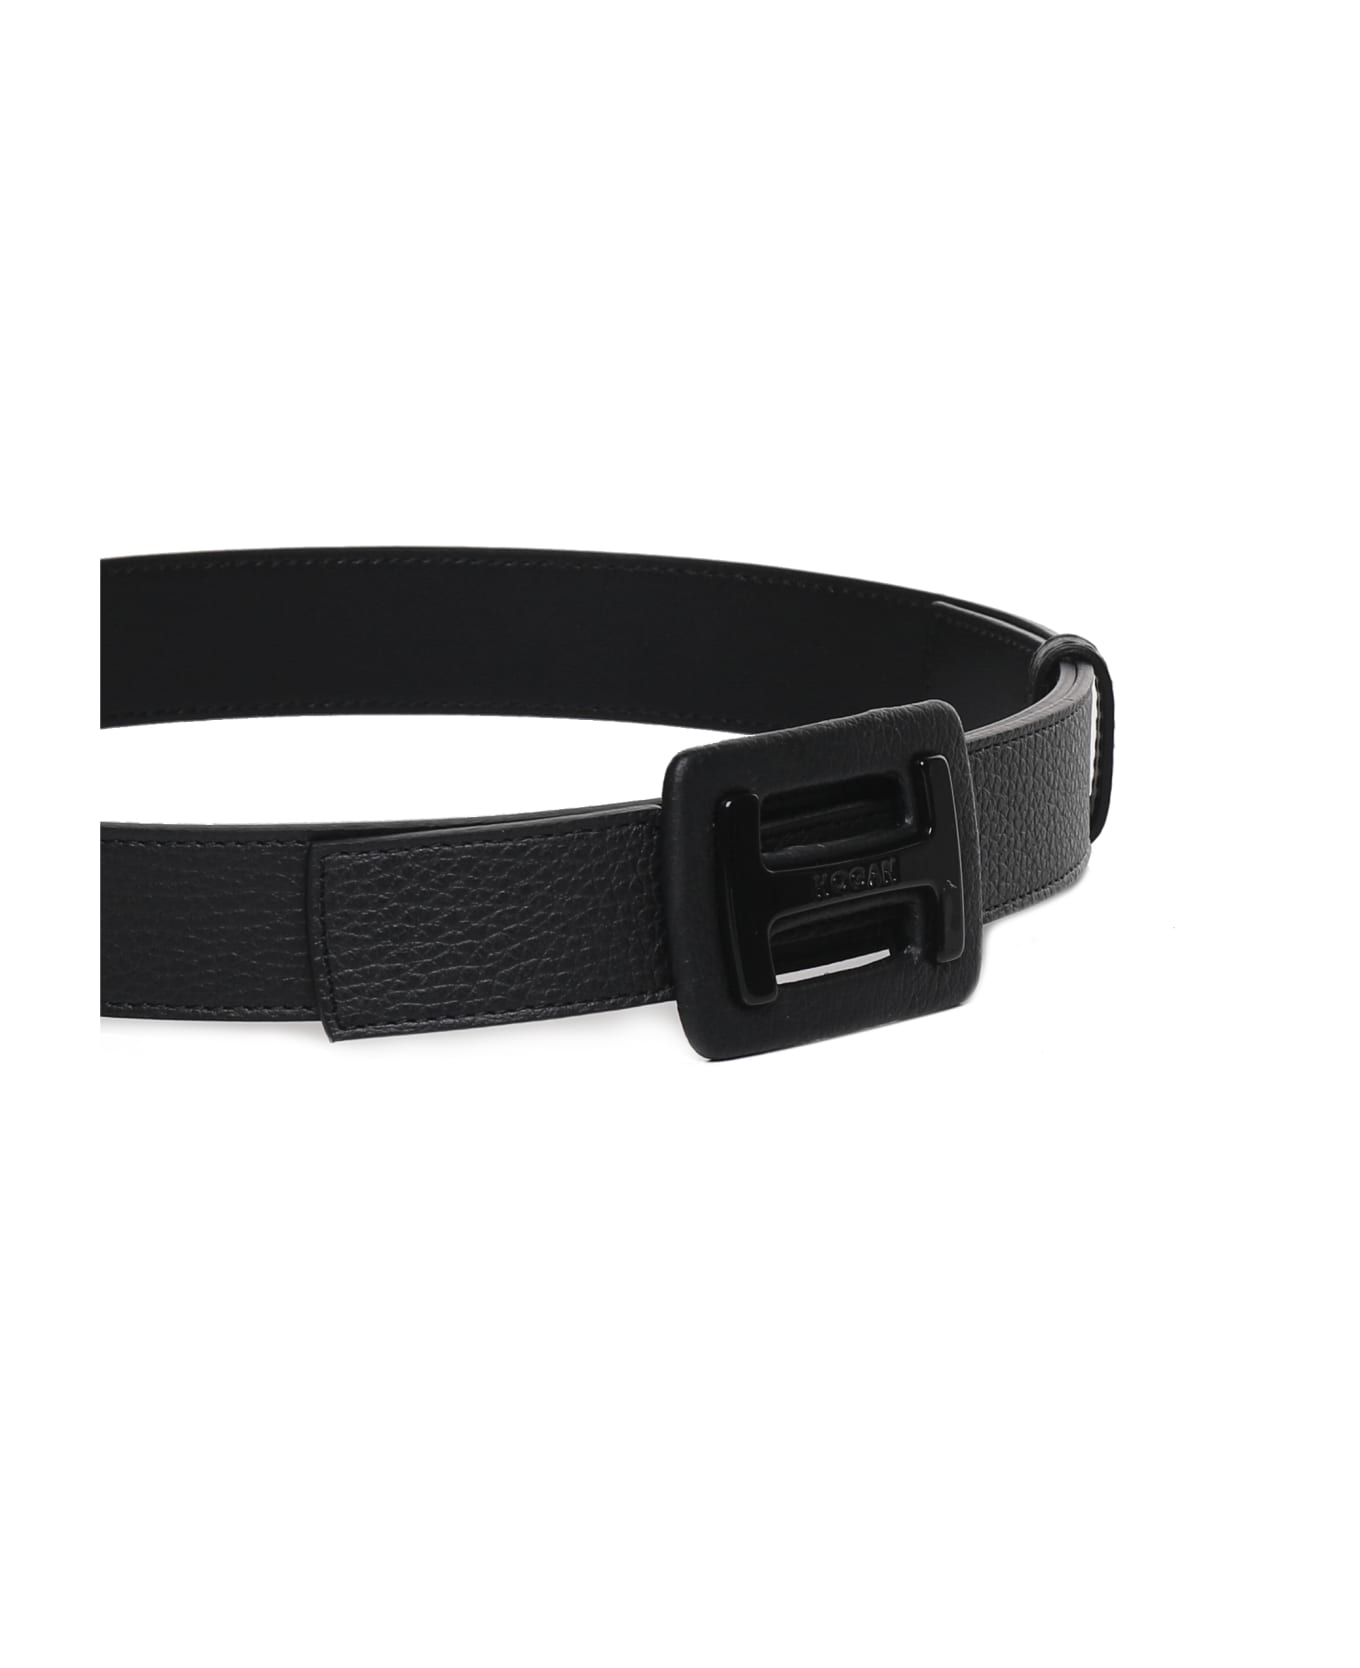 Hogan Leather Belt With Rectangular Buckle - Black